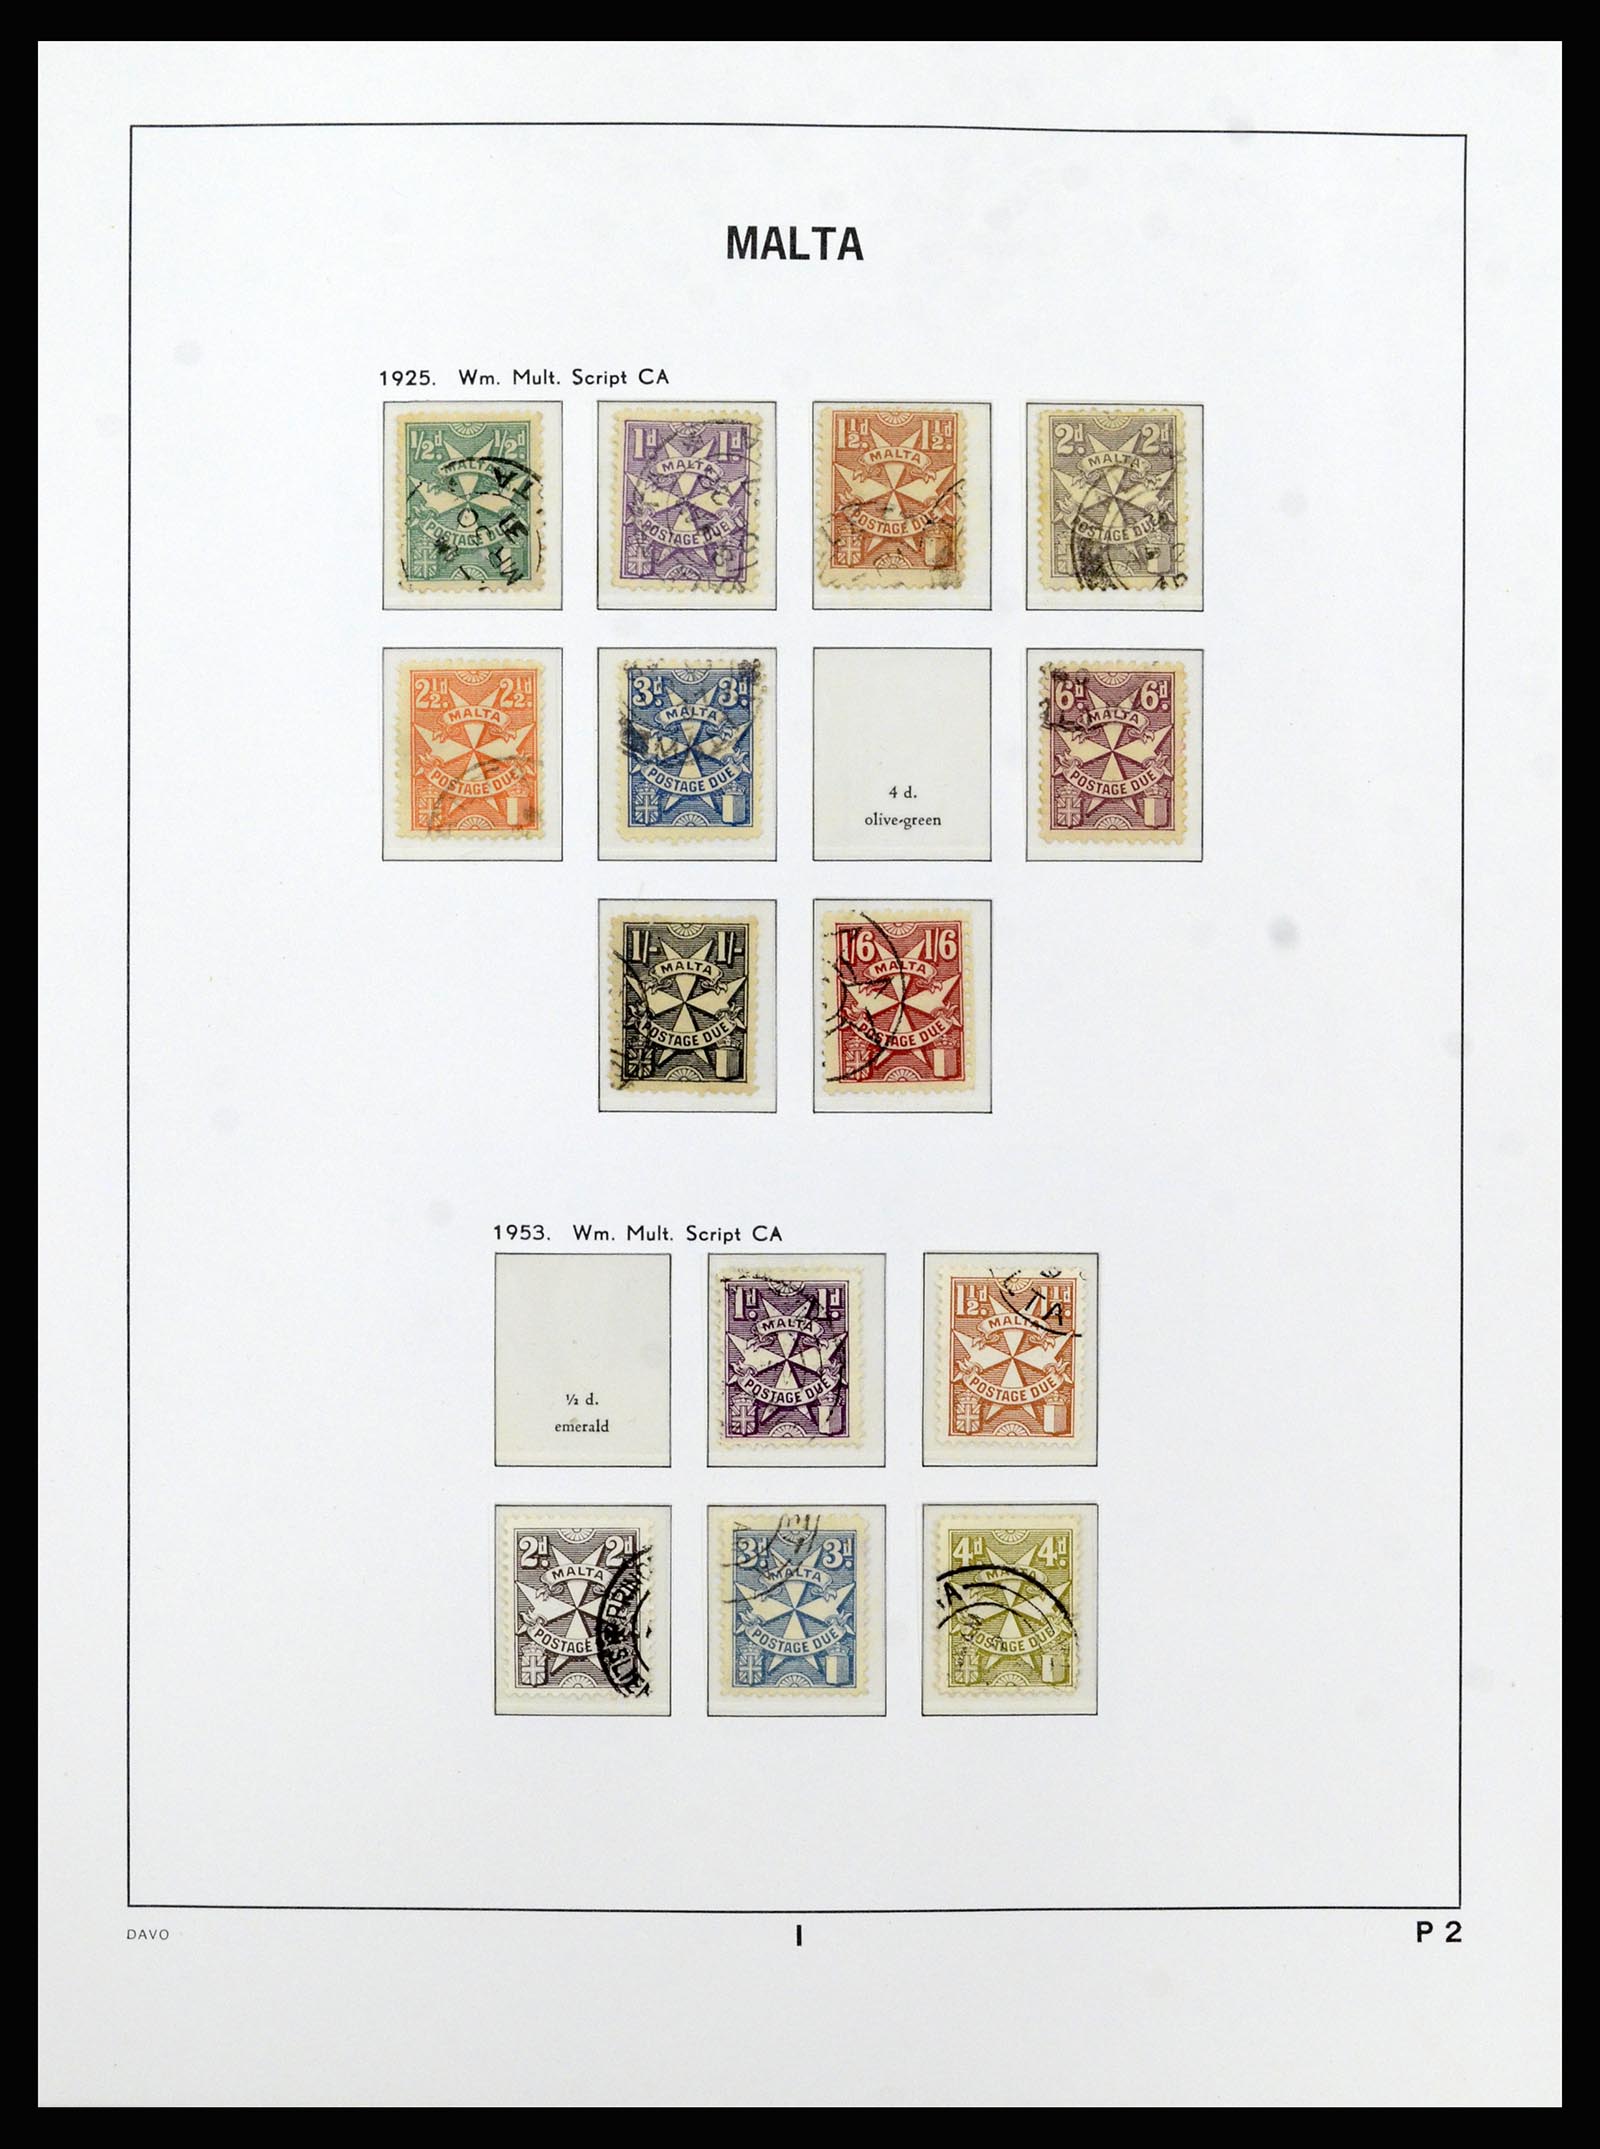 37212 024 - Stamp collection 37212 Malta 1863-1989.